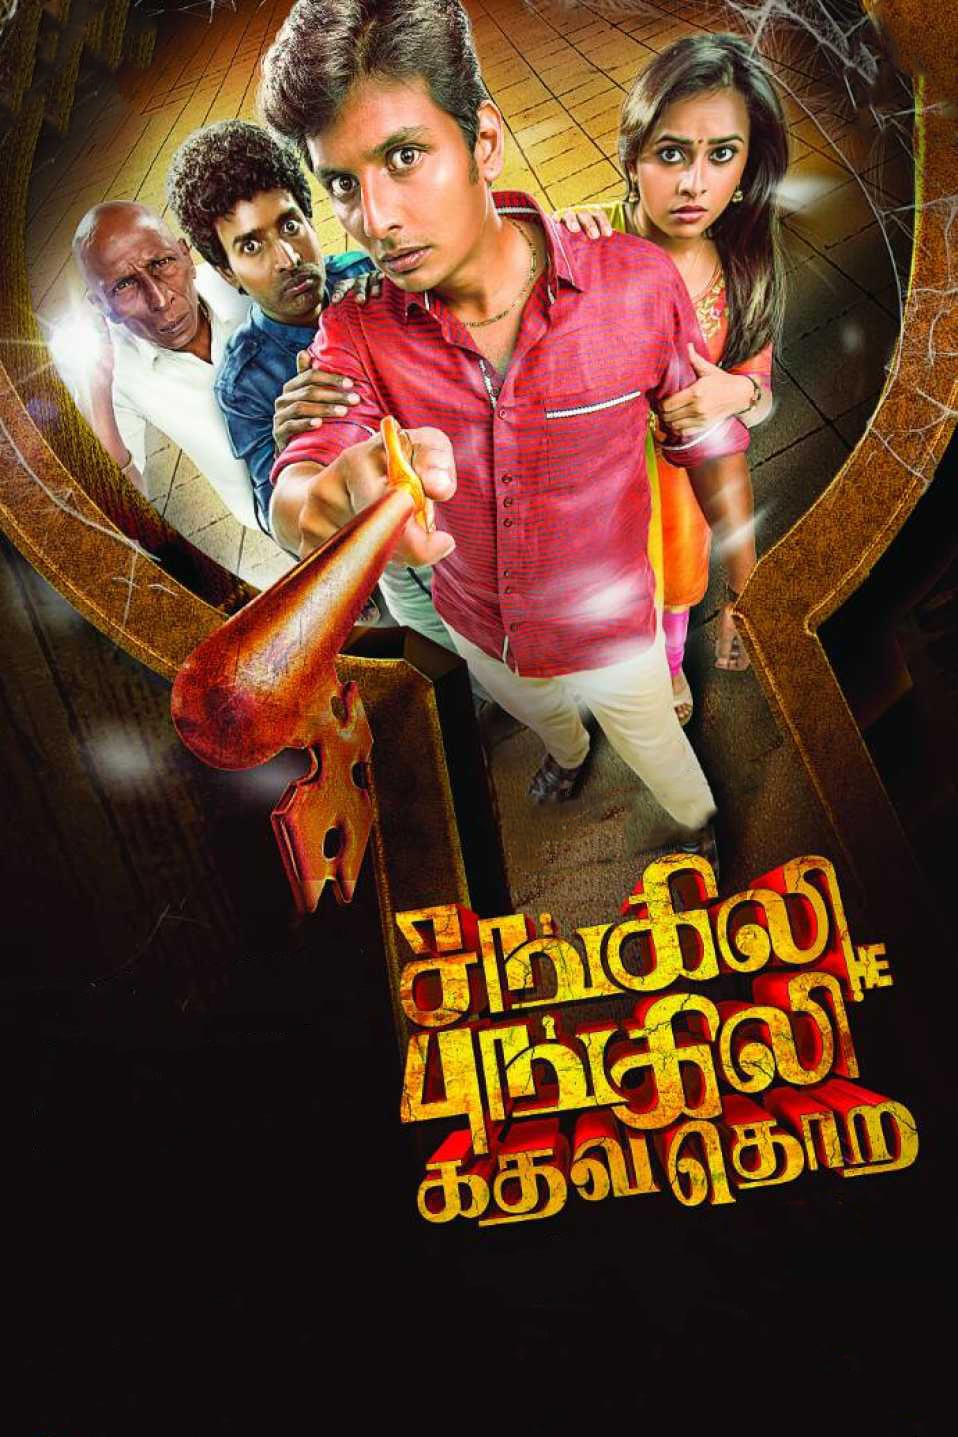 Poster for the movie "Sangili Bungili Kadhava Thorae"